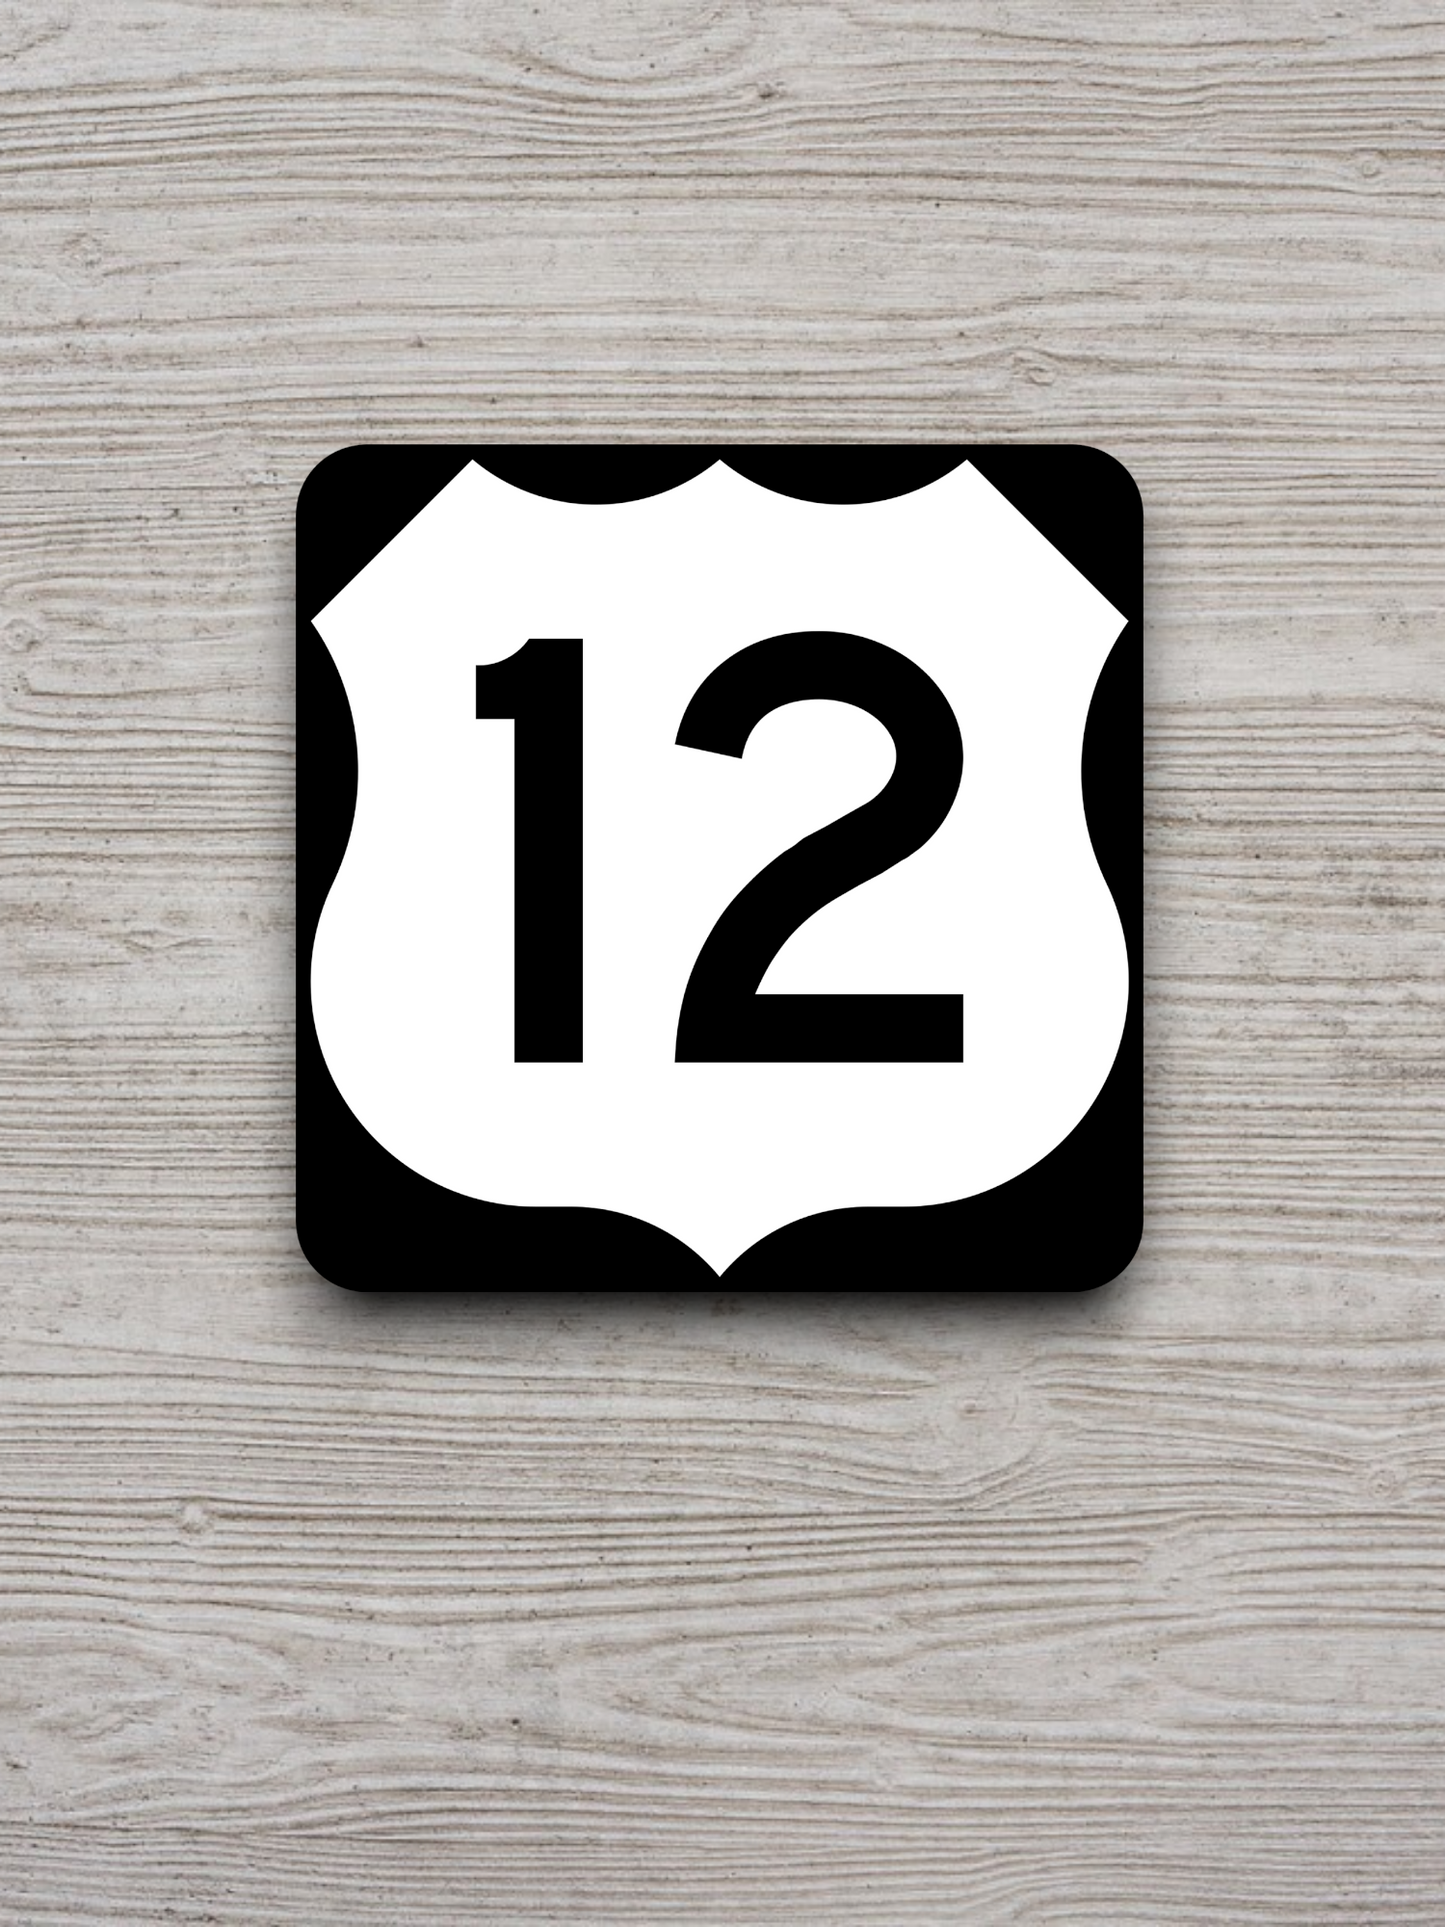 U.S. Route 12 Road Sign Sticker